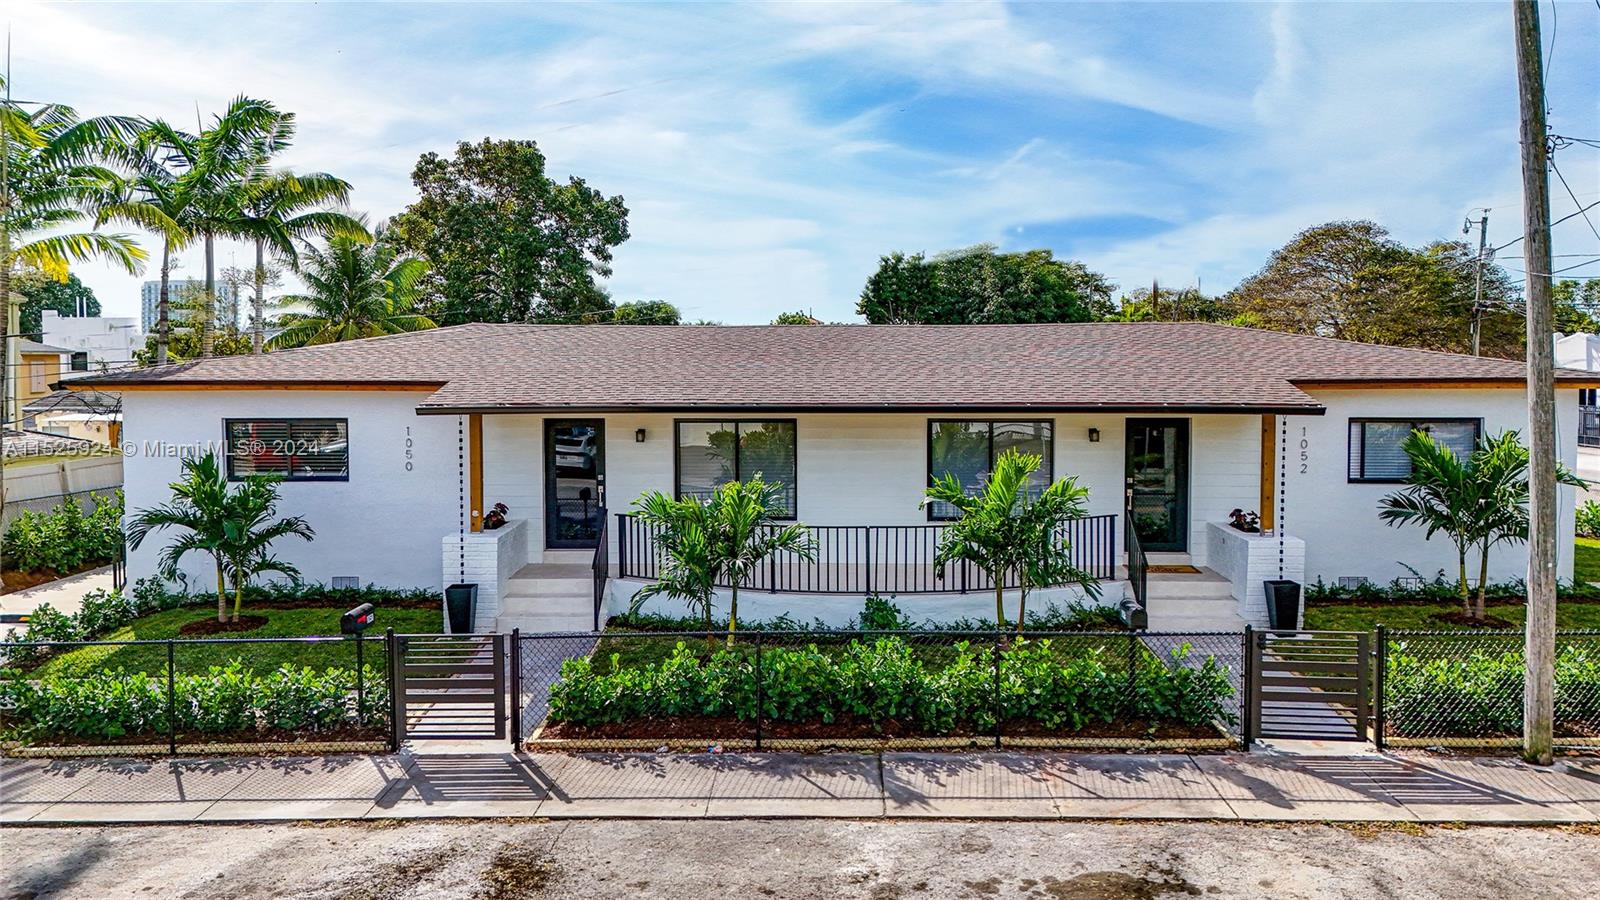 Rental Property at 1050 Sw 11th St St, Miami, Broward County, Florida -  - $1,275,000 MO.